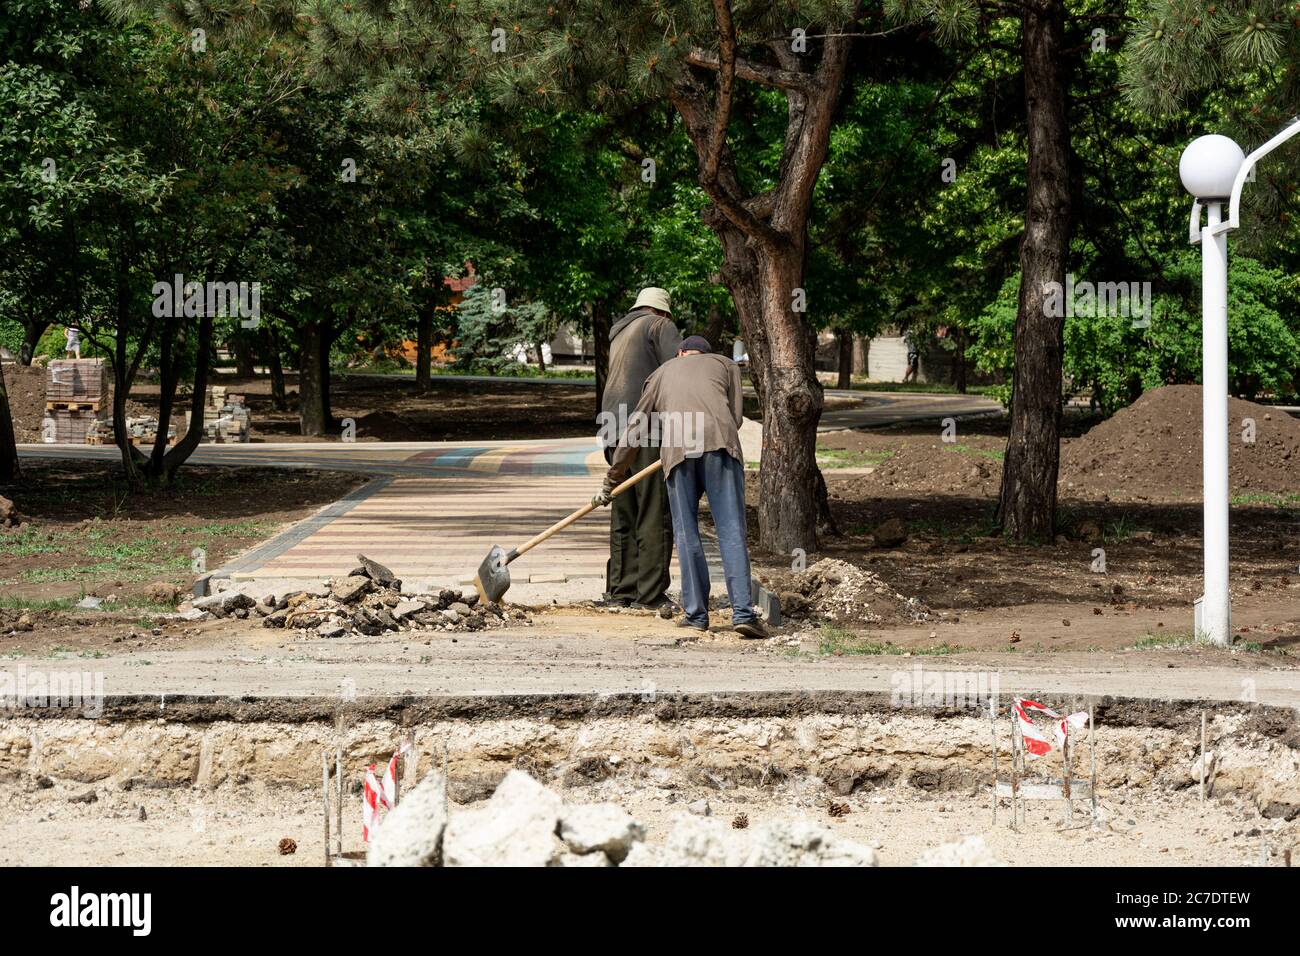 Moldova, Tiraspol, May 25, 2020: Workers lay paving slabs in a park Stock Photo